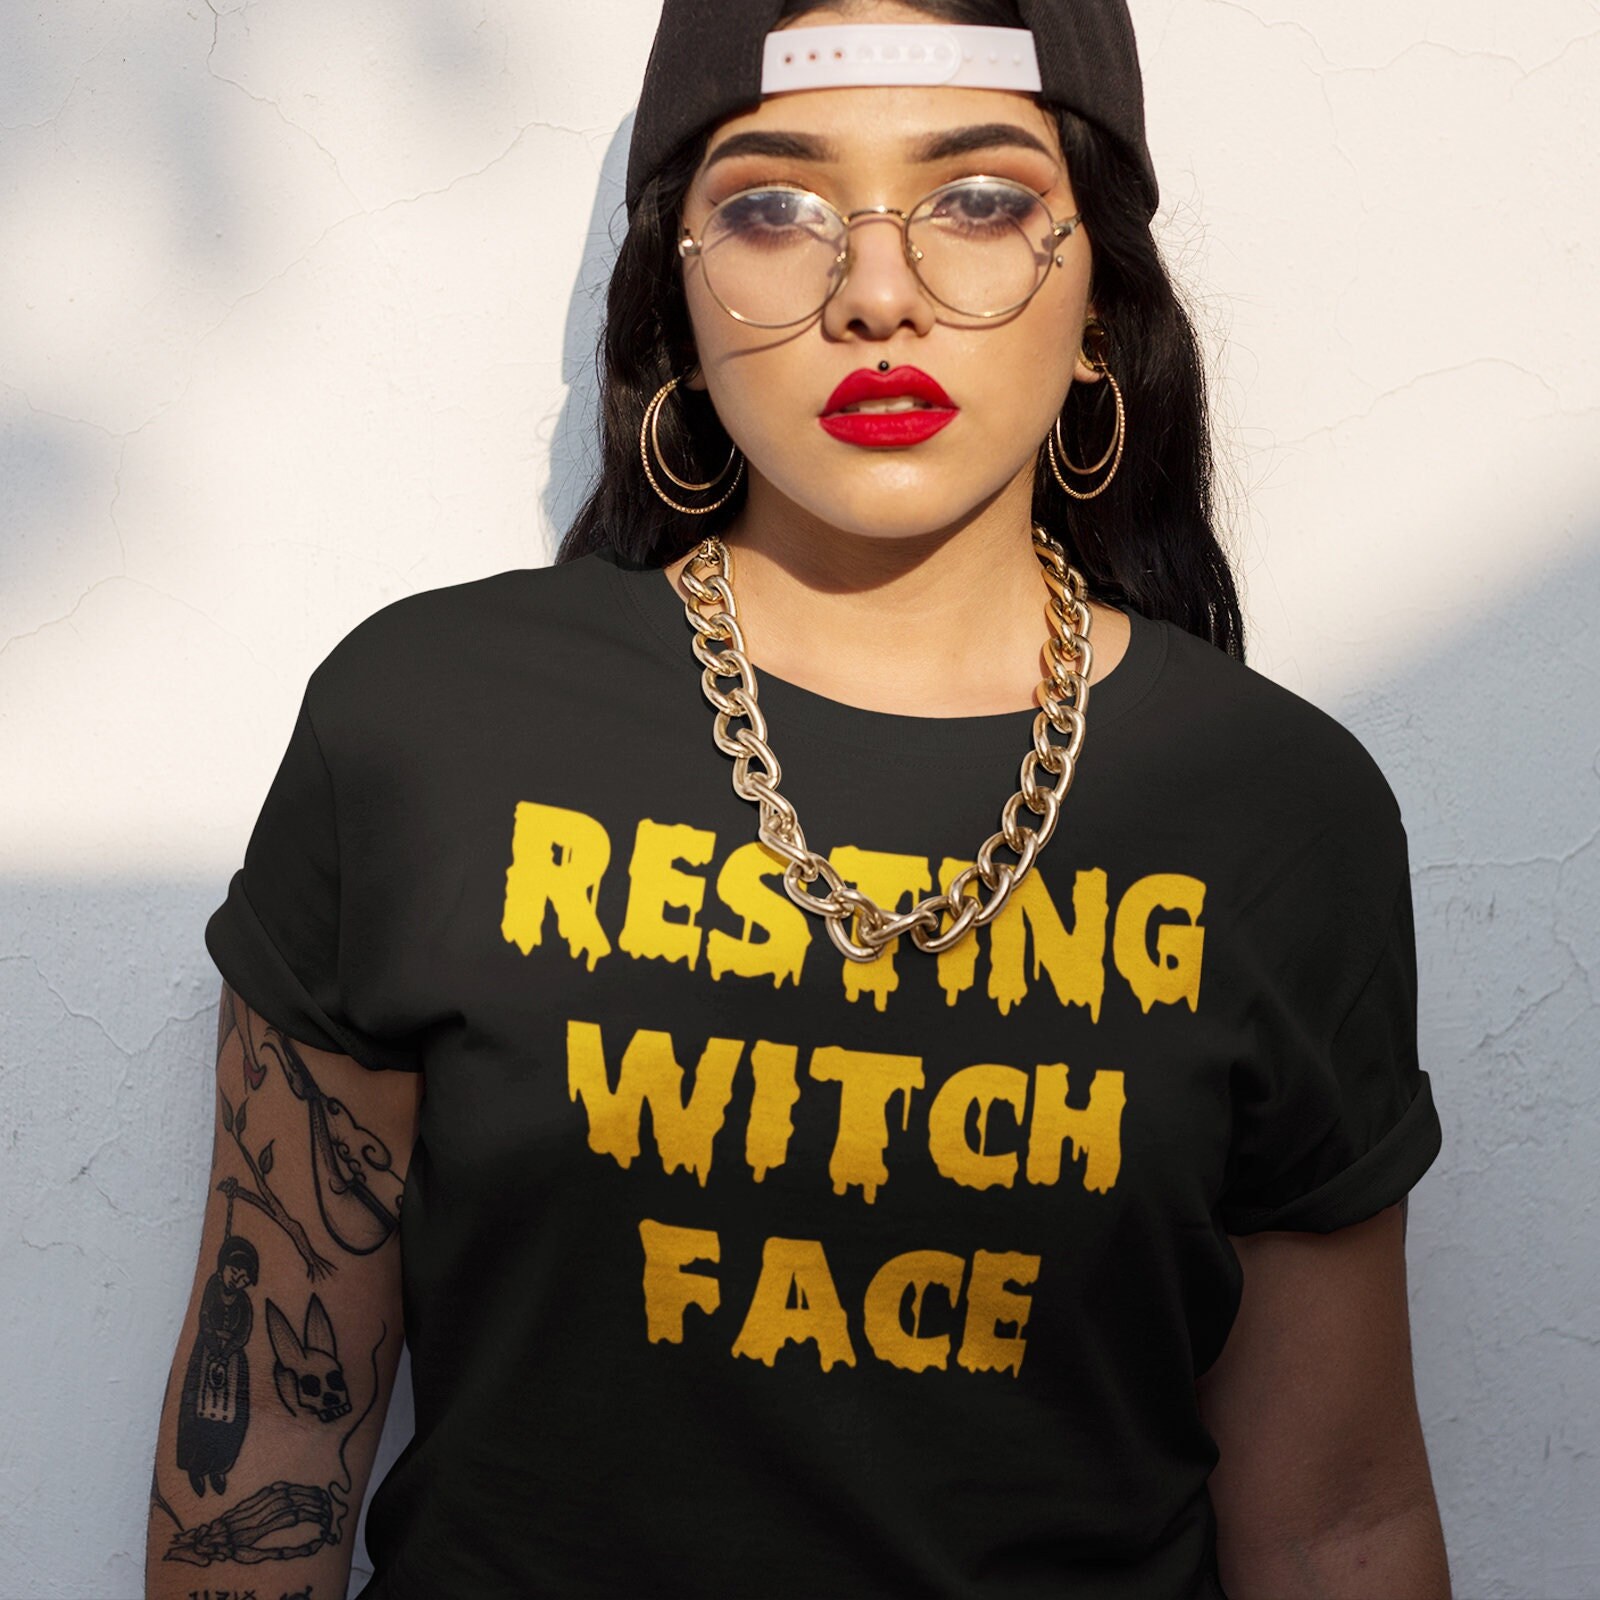 Resting Witch Face Halloween Kostüm, T-Shirt, Outfit, Kostüm Für Frauen, Damen Hexenkostüm von PrintCartelStore